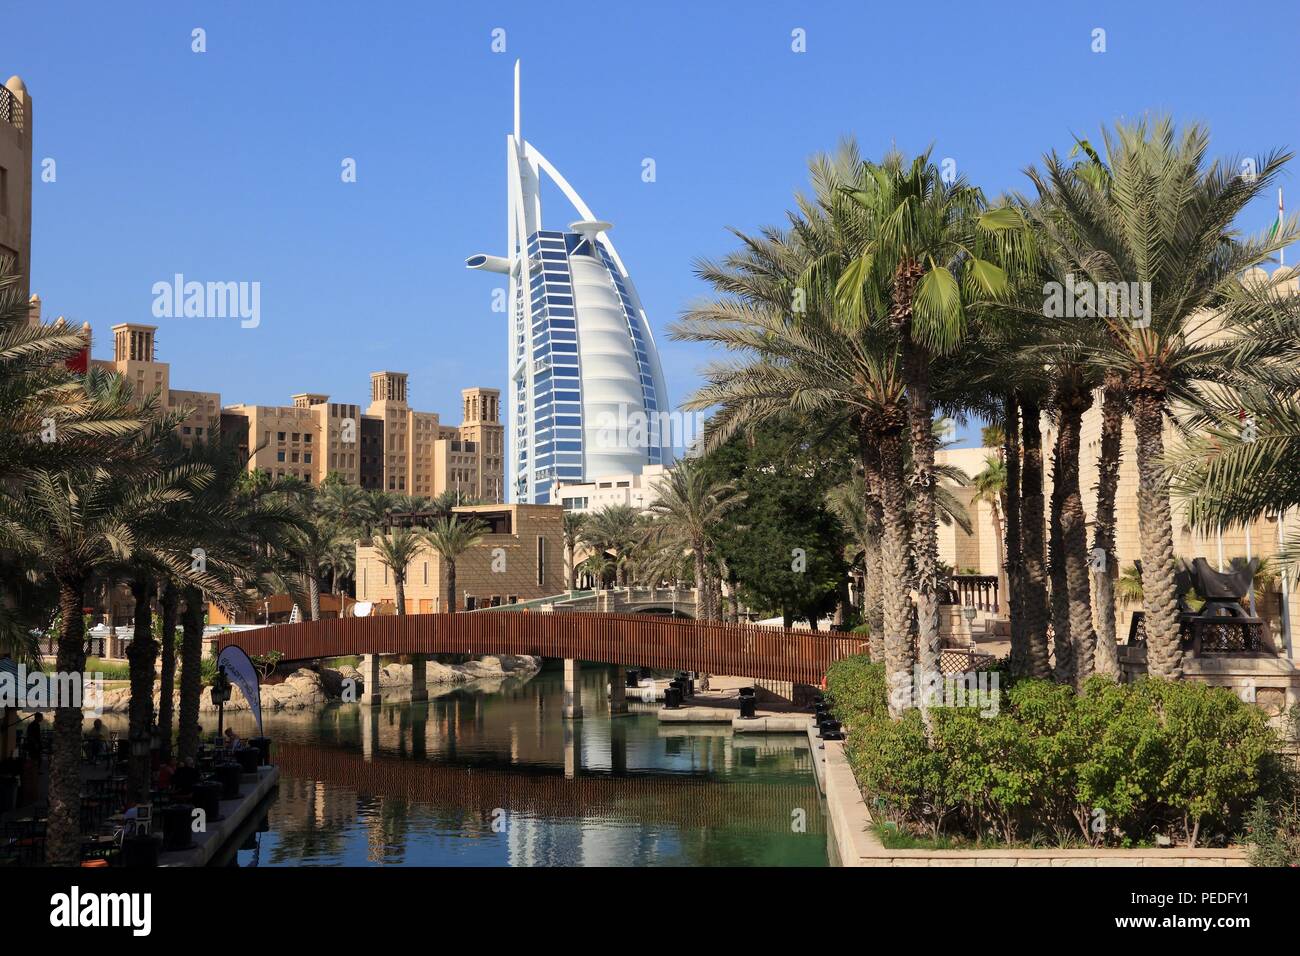 DUBAI, UAE - NOVEMBER 23, 2017: Burj Al Arab skyscraper in Dubai. The sail shaped modern hotel is managed by Jumeirah Group. Stock Photo